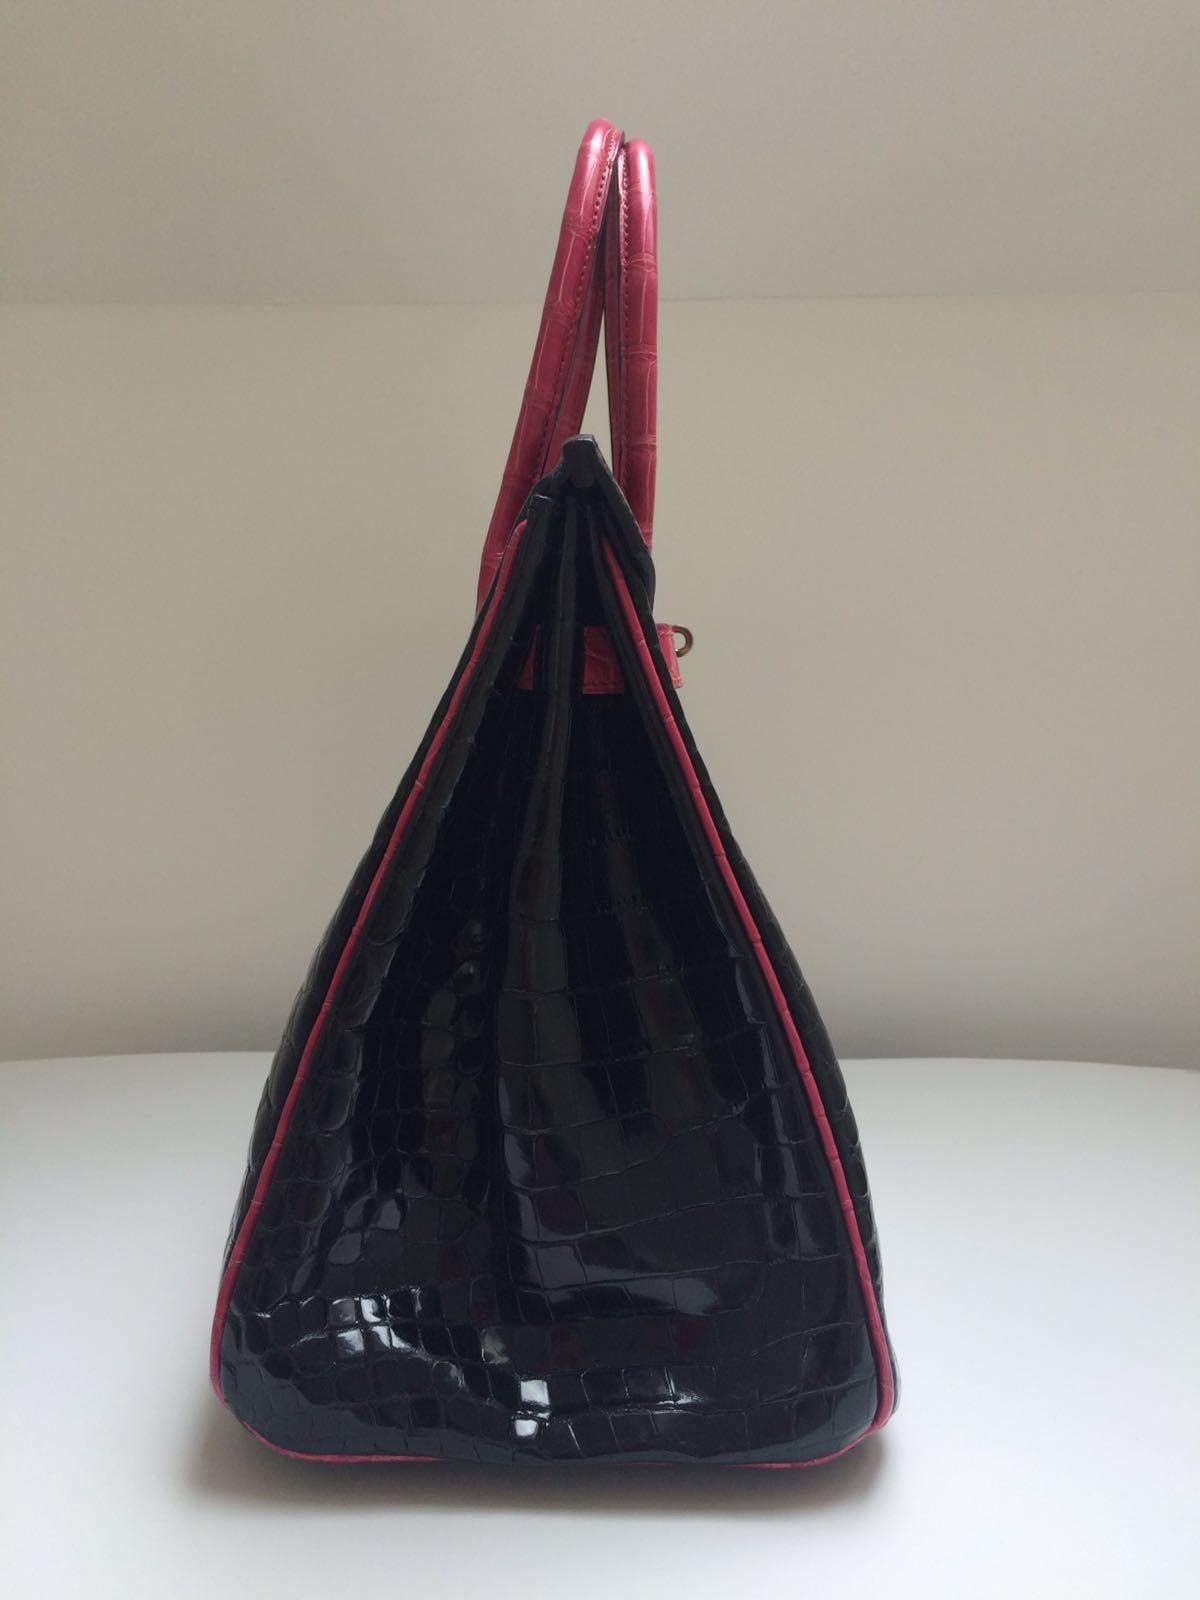 Hermes Black and fuchsia shiny crocodile Birkin 35cm Bag For Sale 1